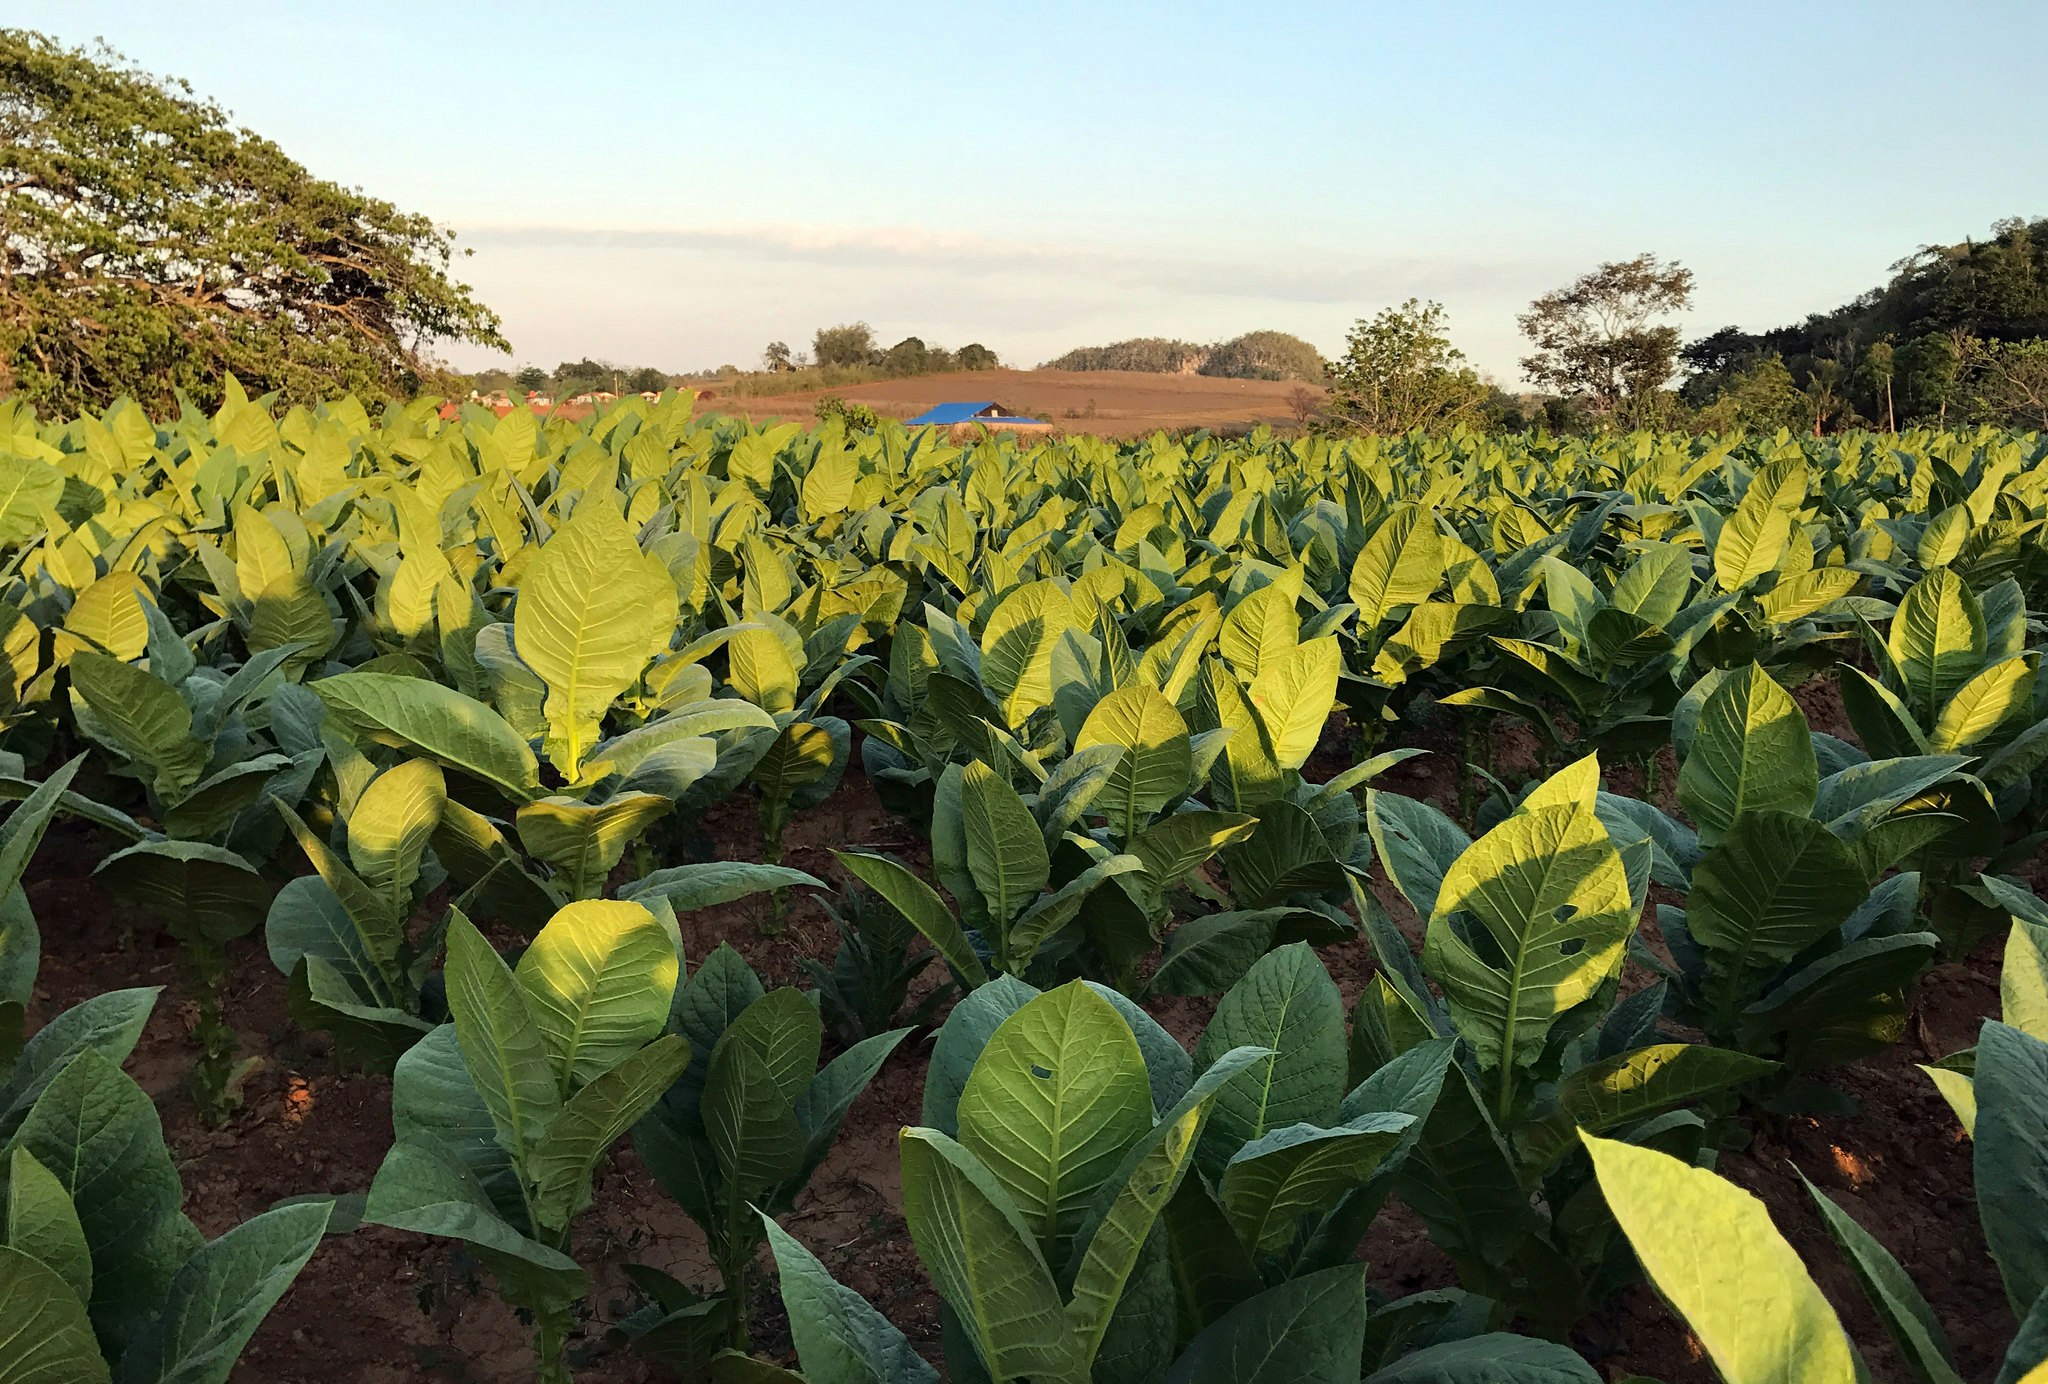 A tobacco field